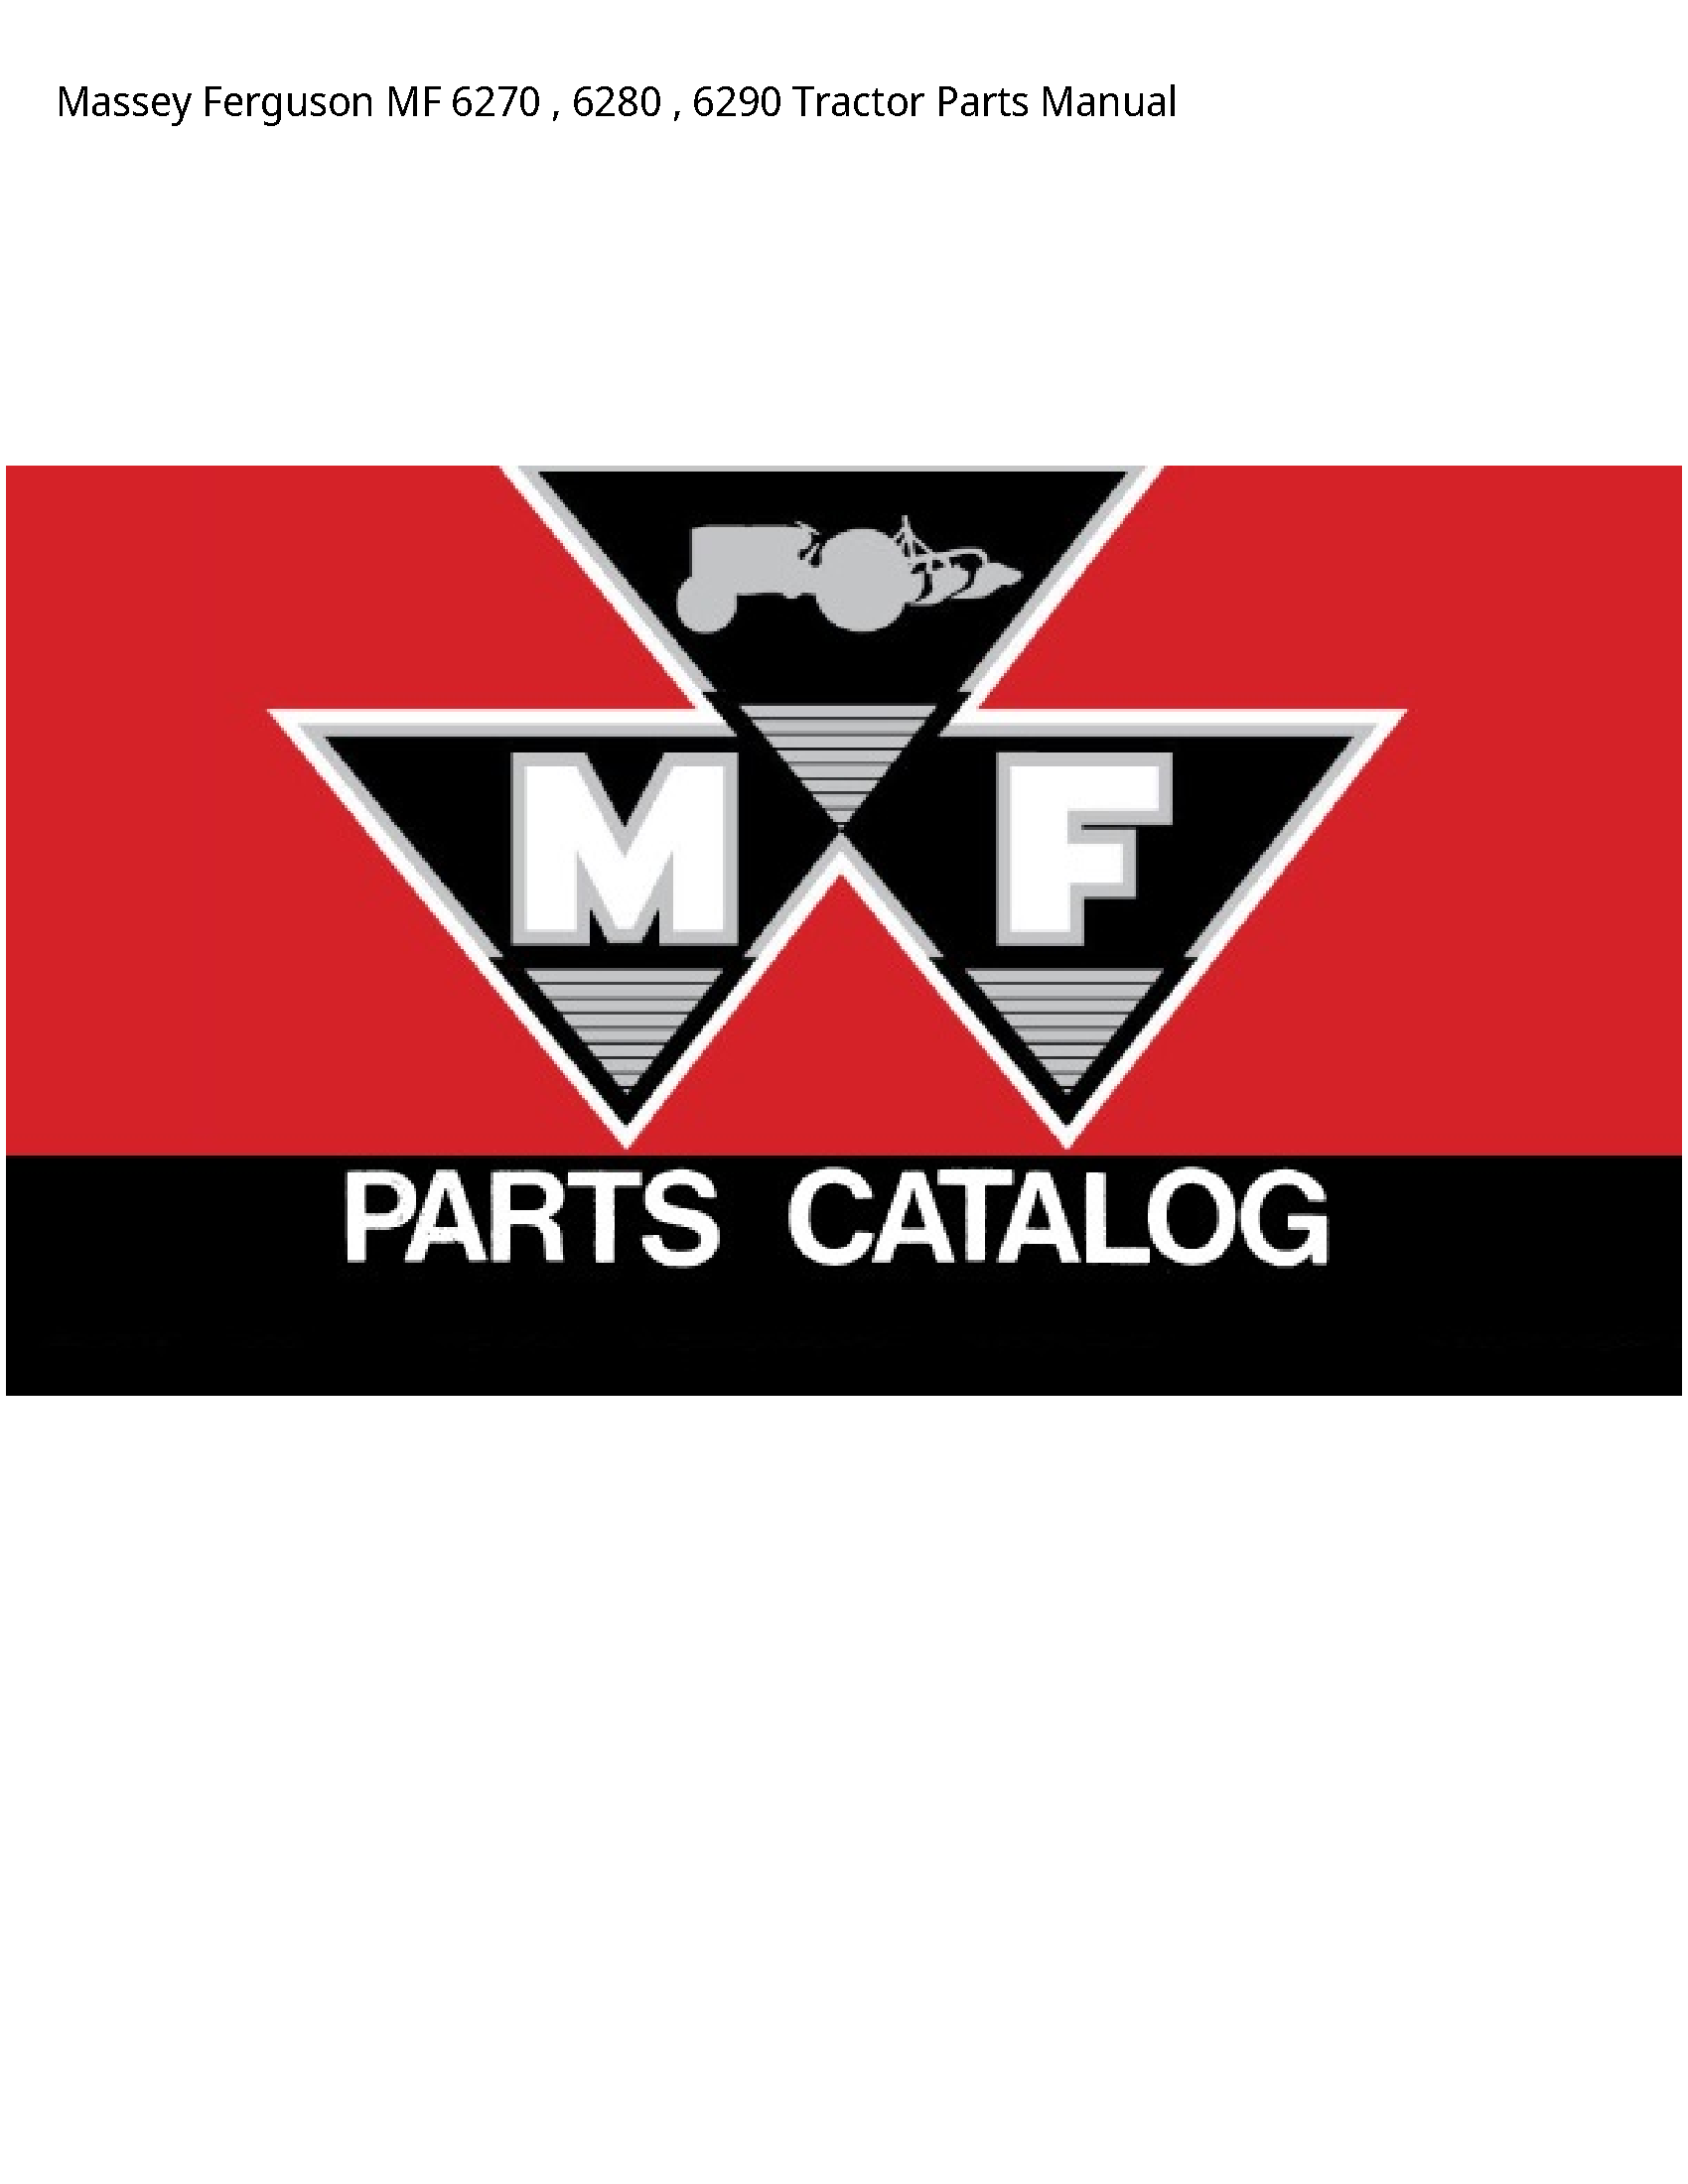 Massey Ferguson 6270 MF Tractor Parts manual